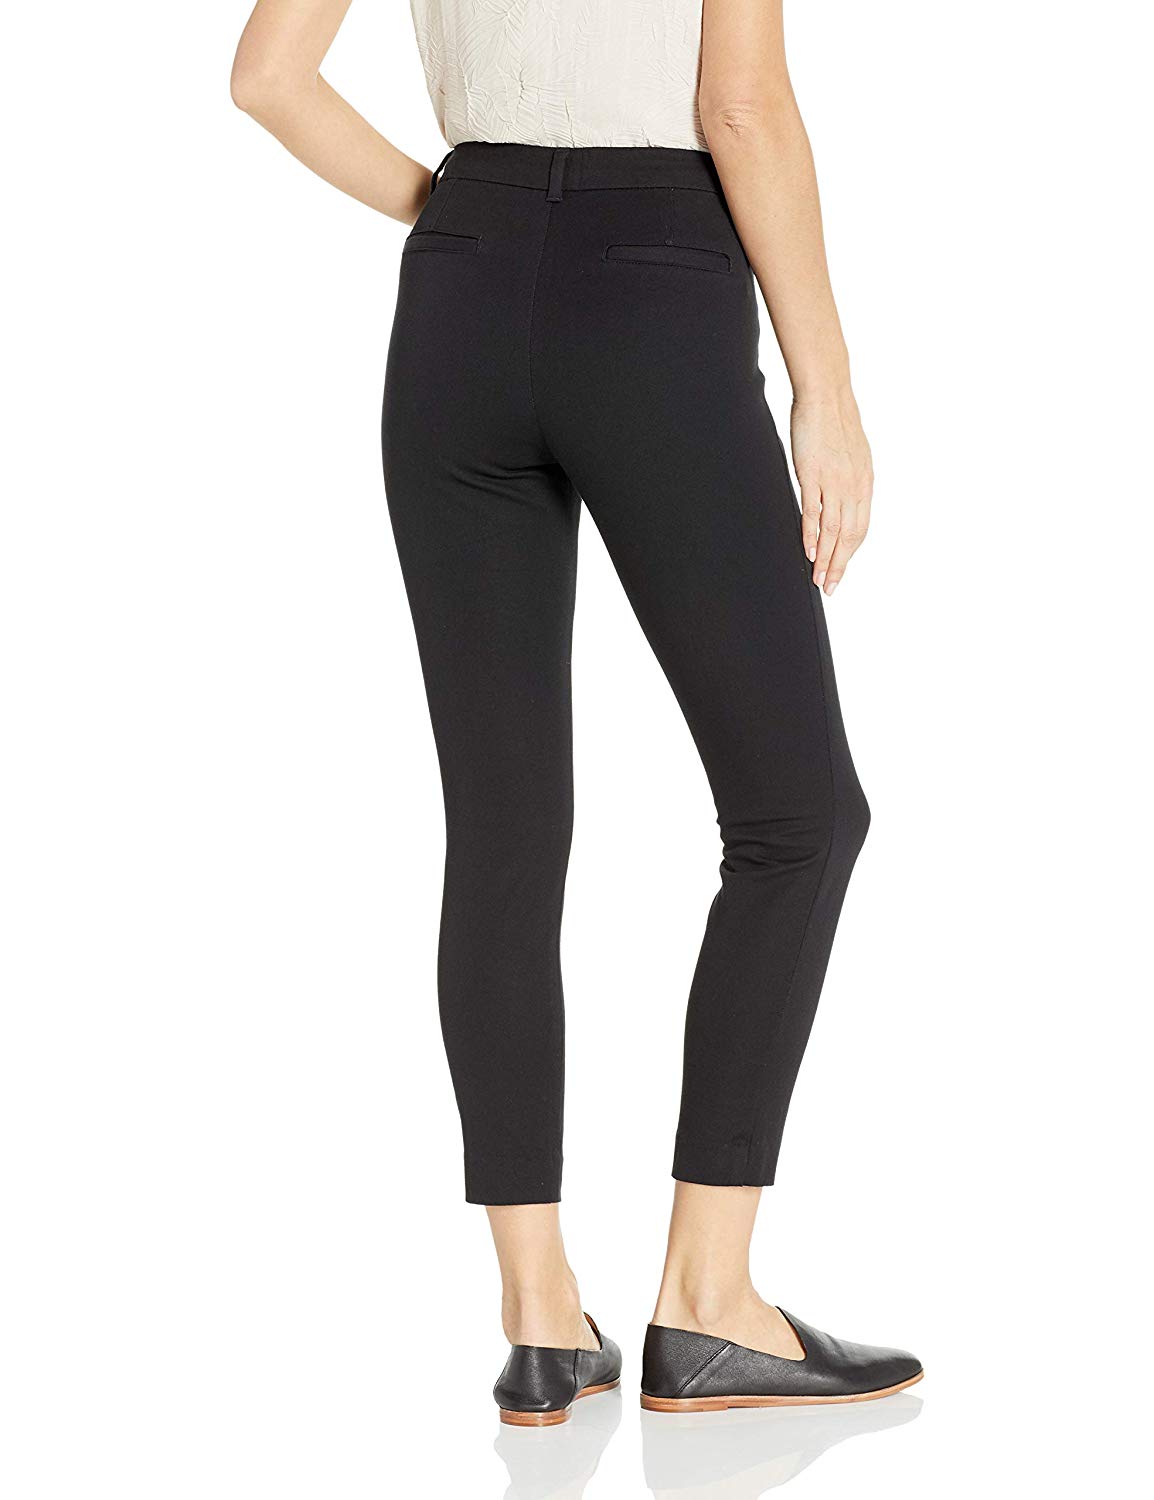 Essentials Women's Skinny Ankle Pant, Black, 2 Long, Black, Size 2.0 ...